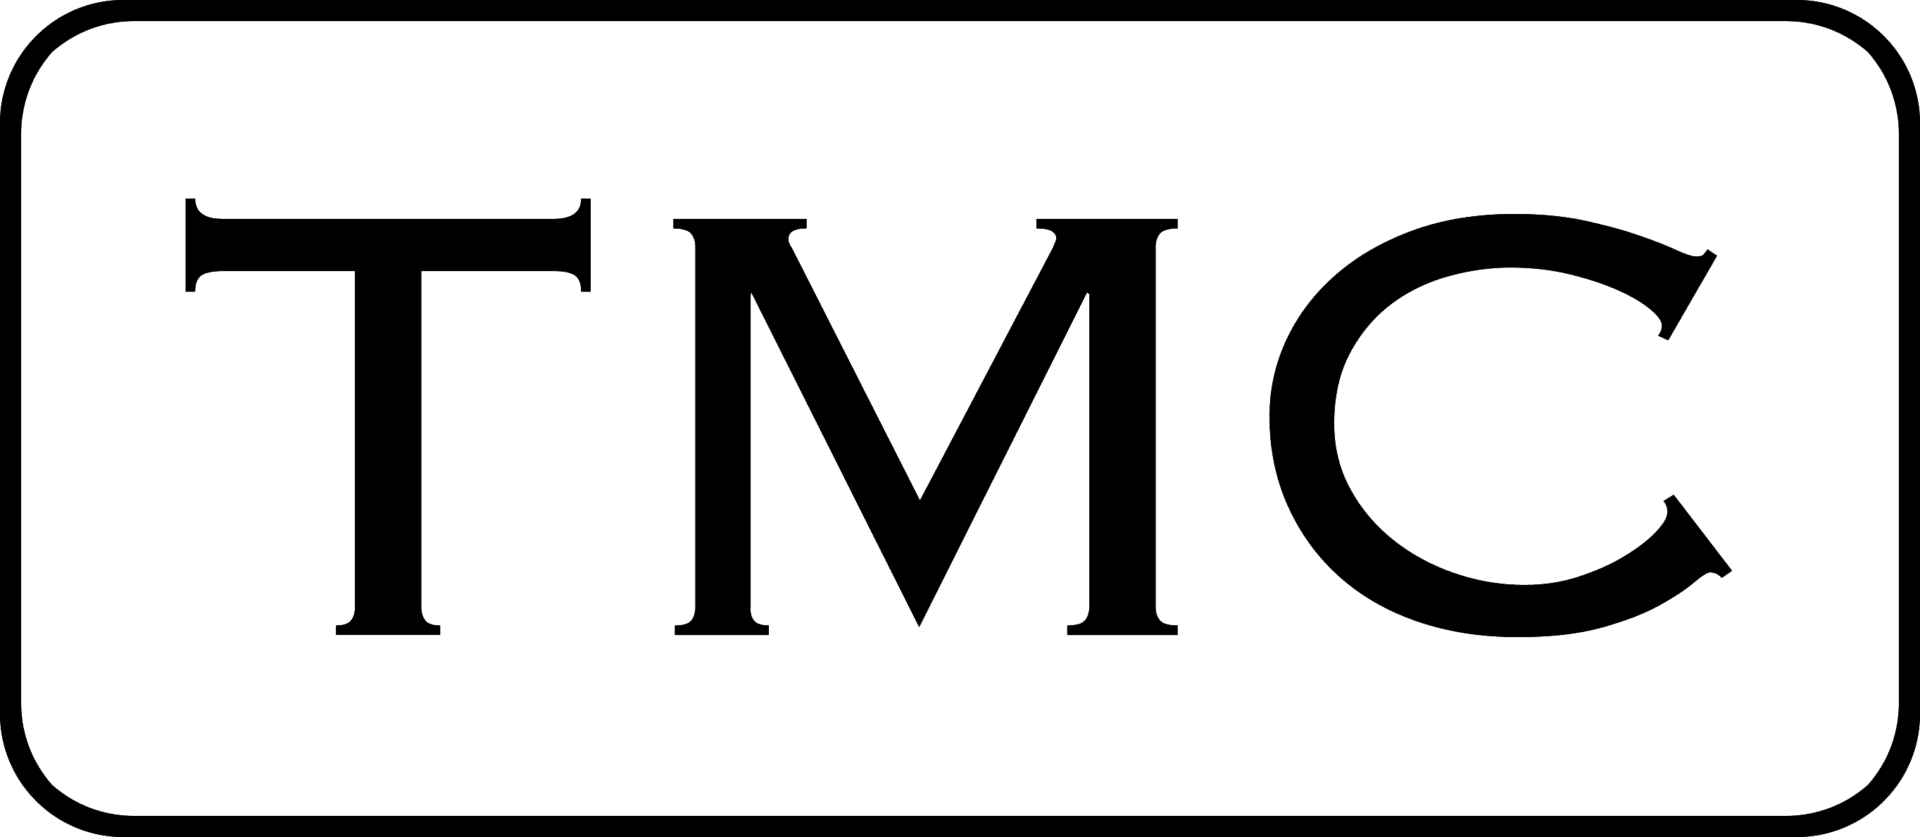 TMC Logo Black